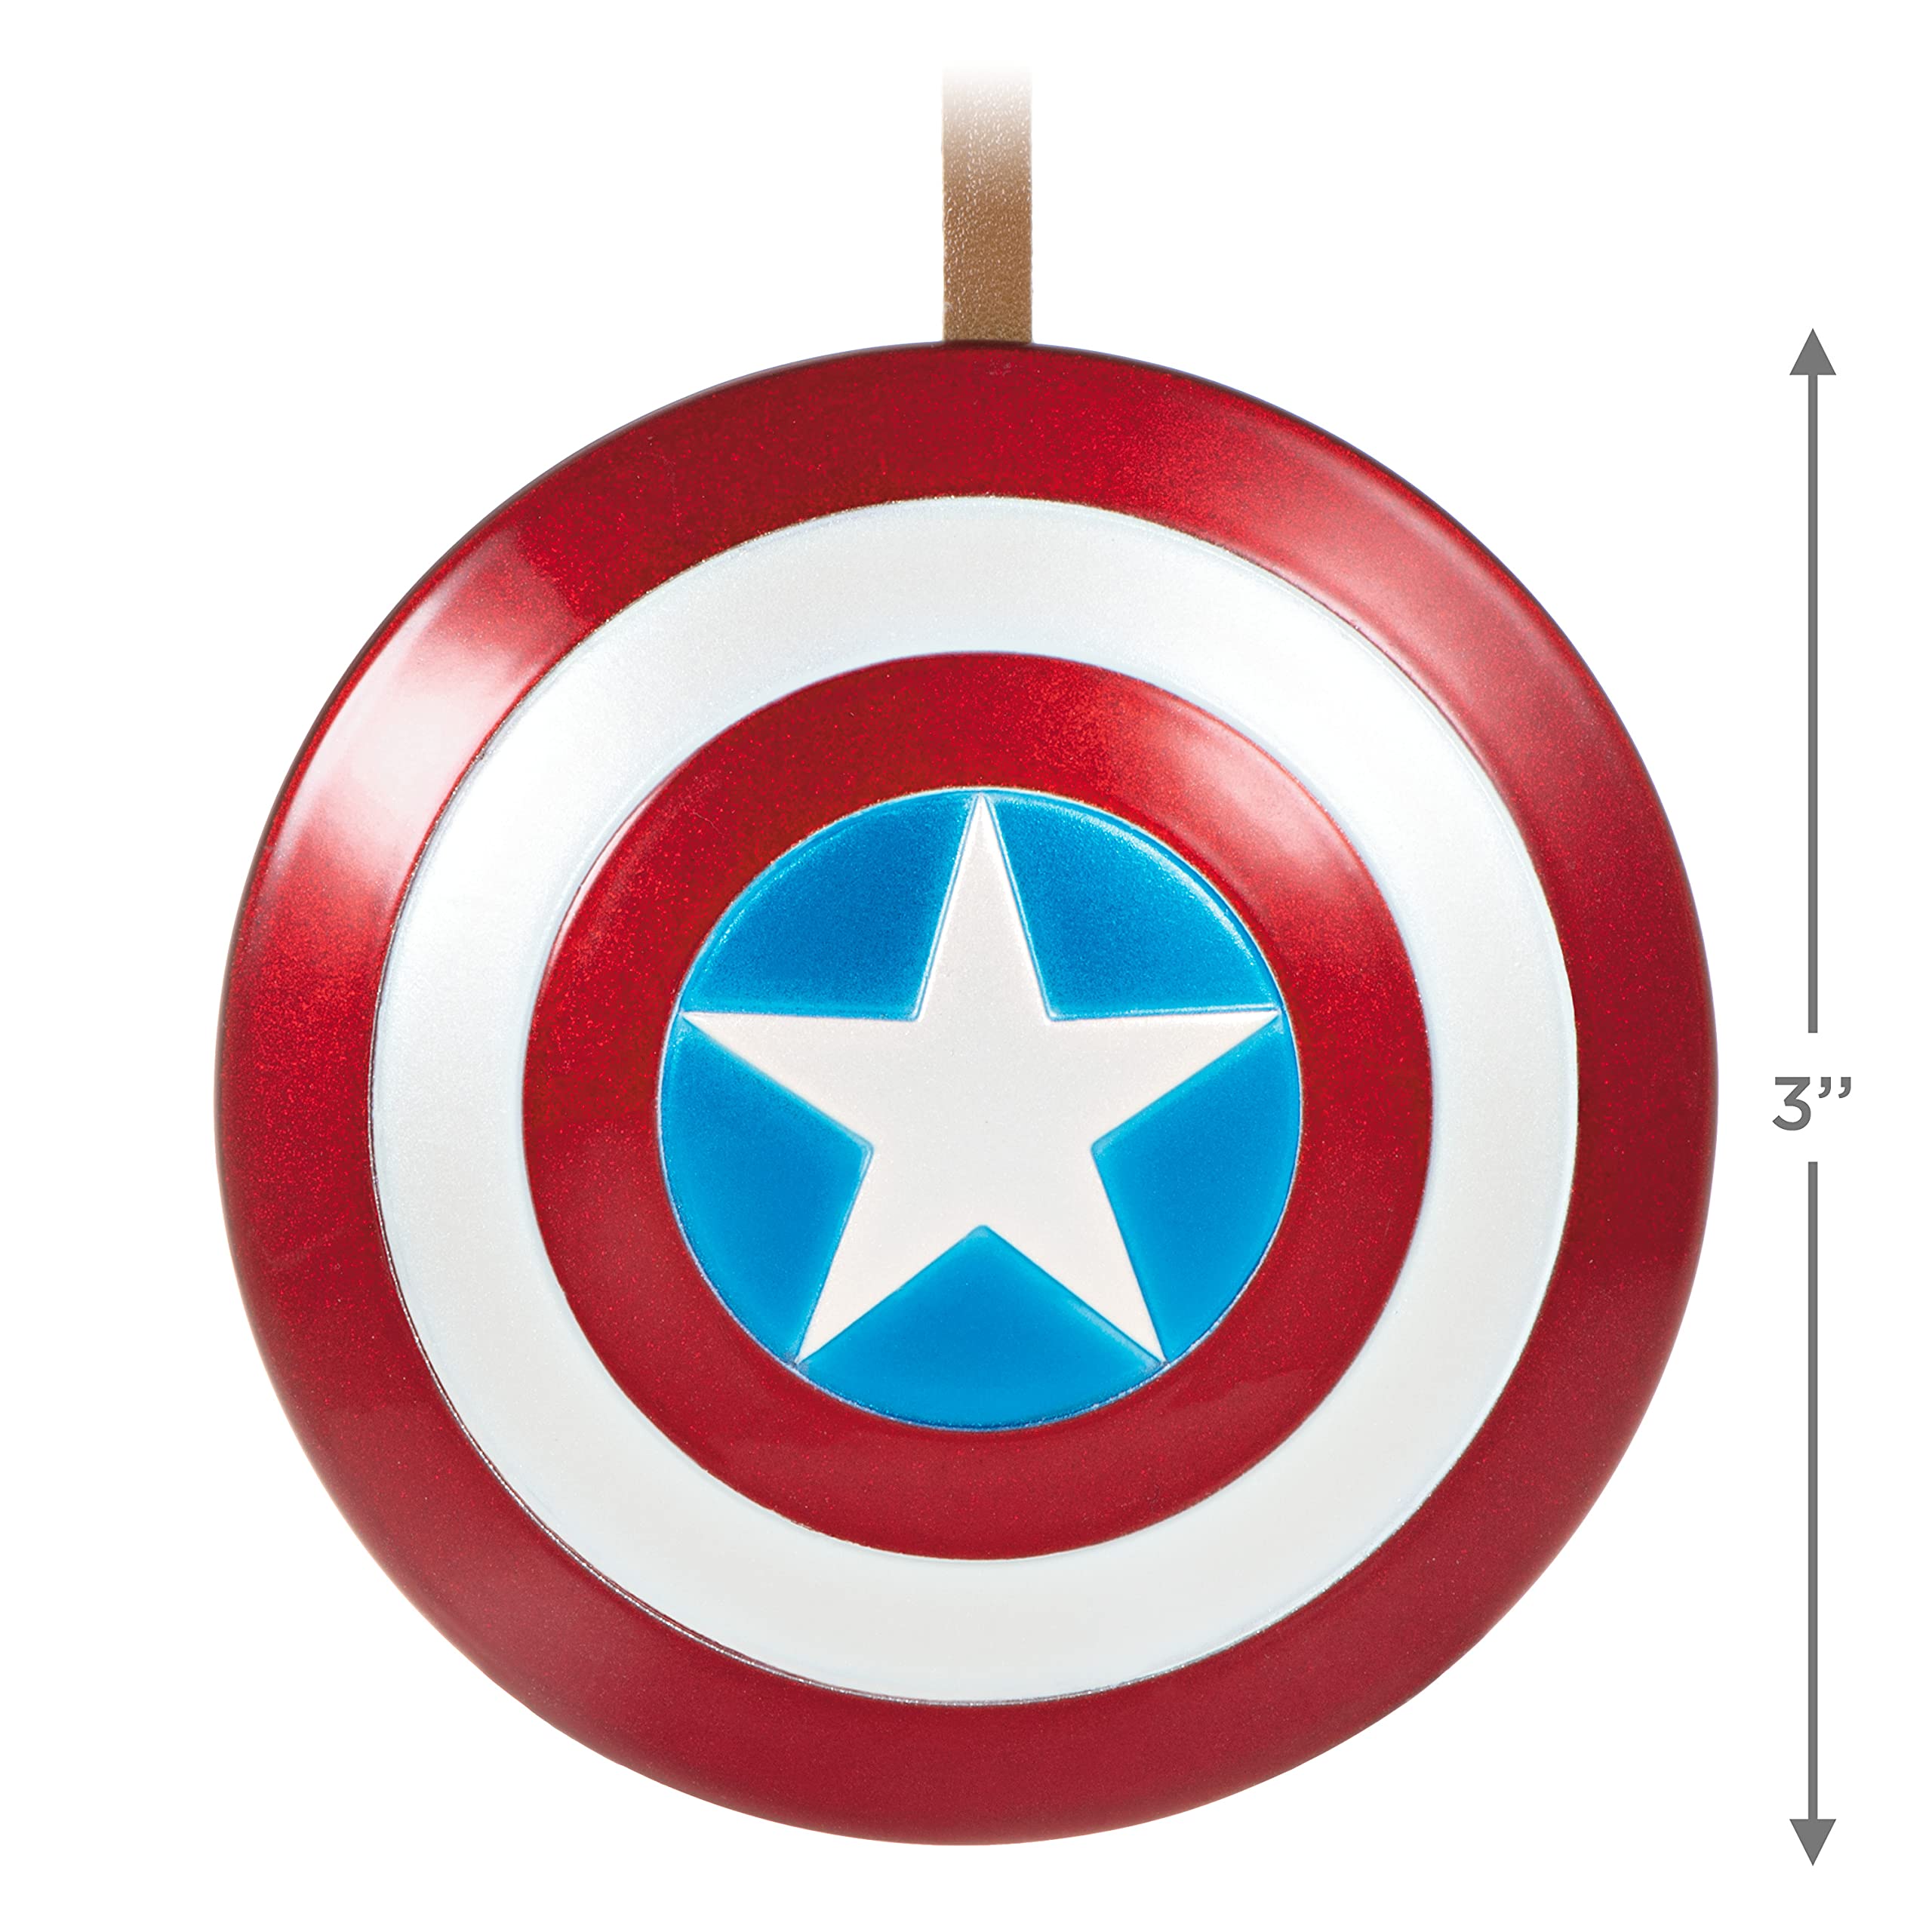 Captain America's Shield Hallmark Keepsake Christmas Ornament 2021